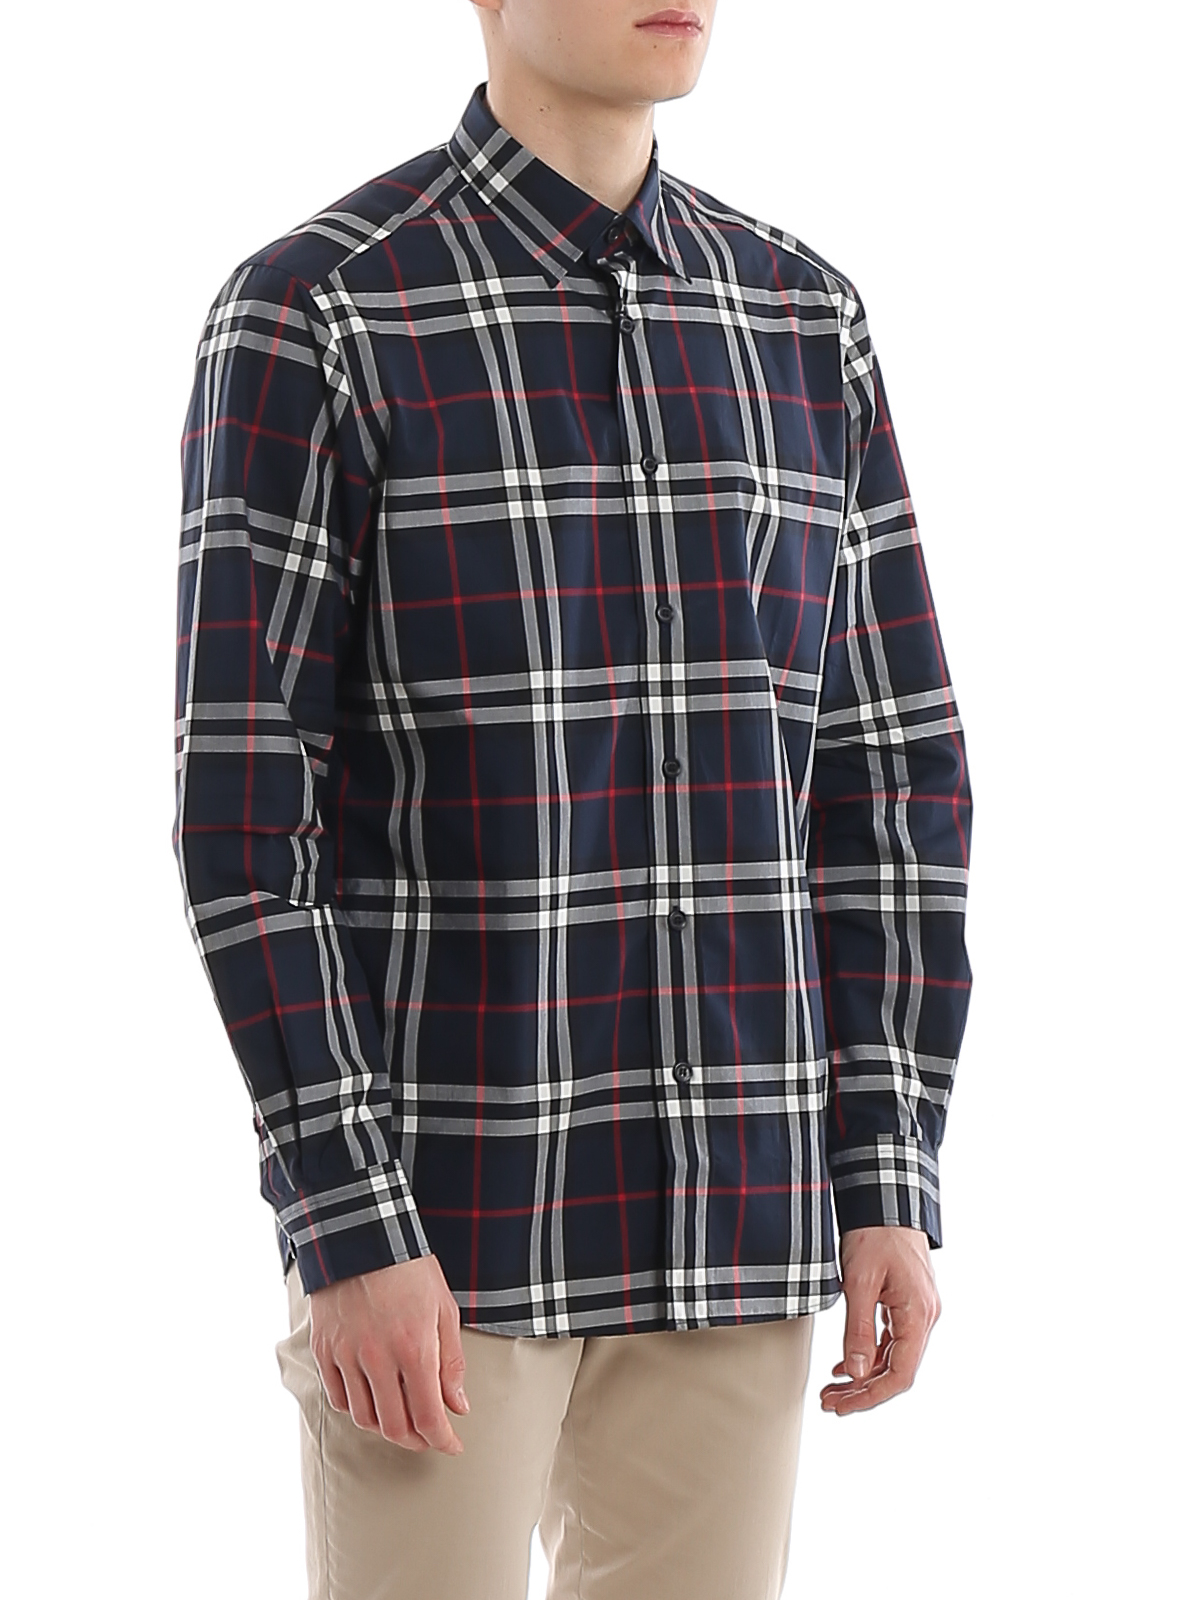 Shirts Burberry - Caxton shirt - 8020865 | Shop online at iKRIX